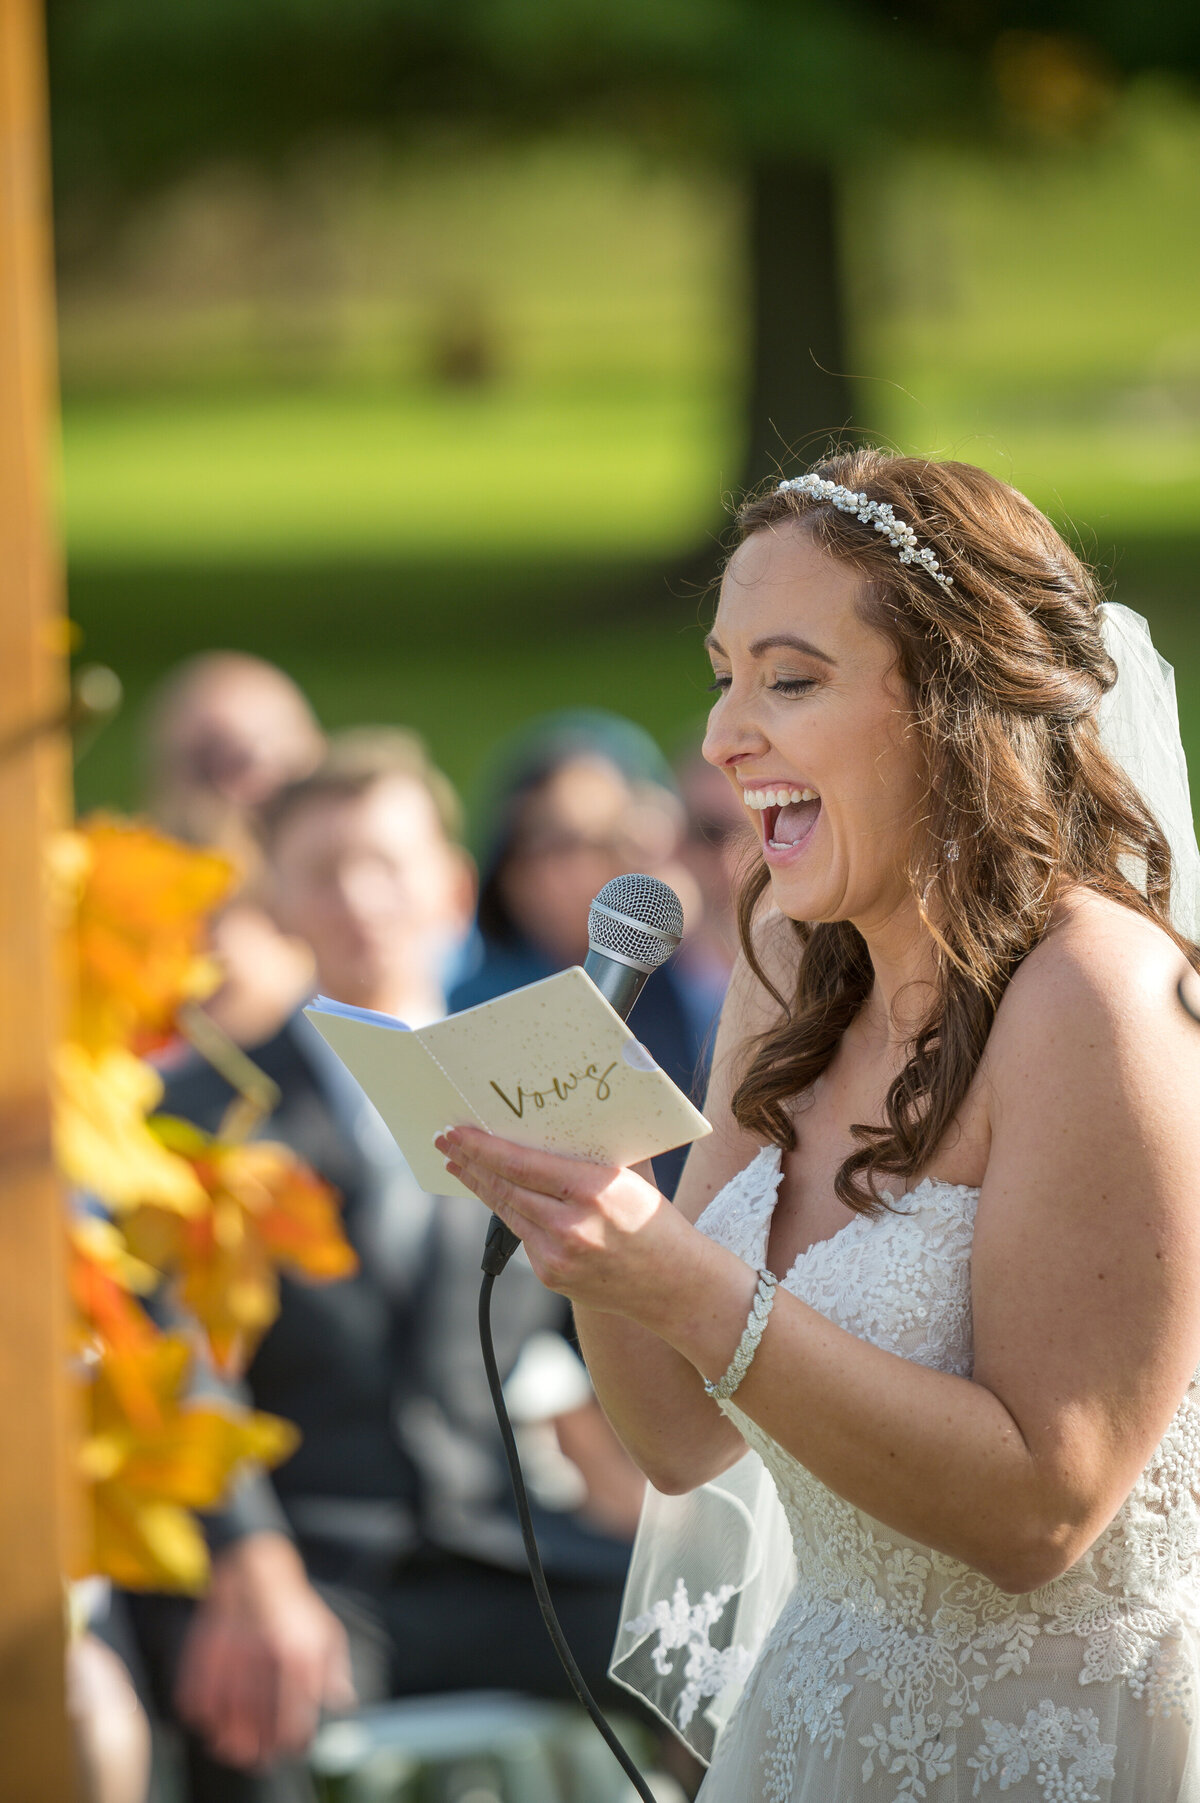 Bride reading vows during outdoor wedding ceremony.